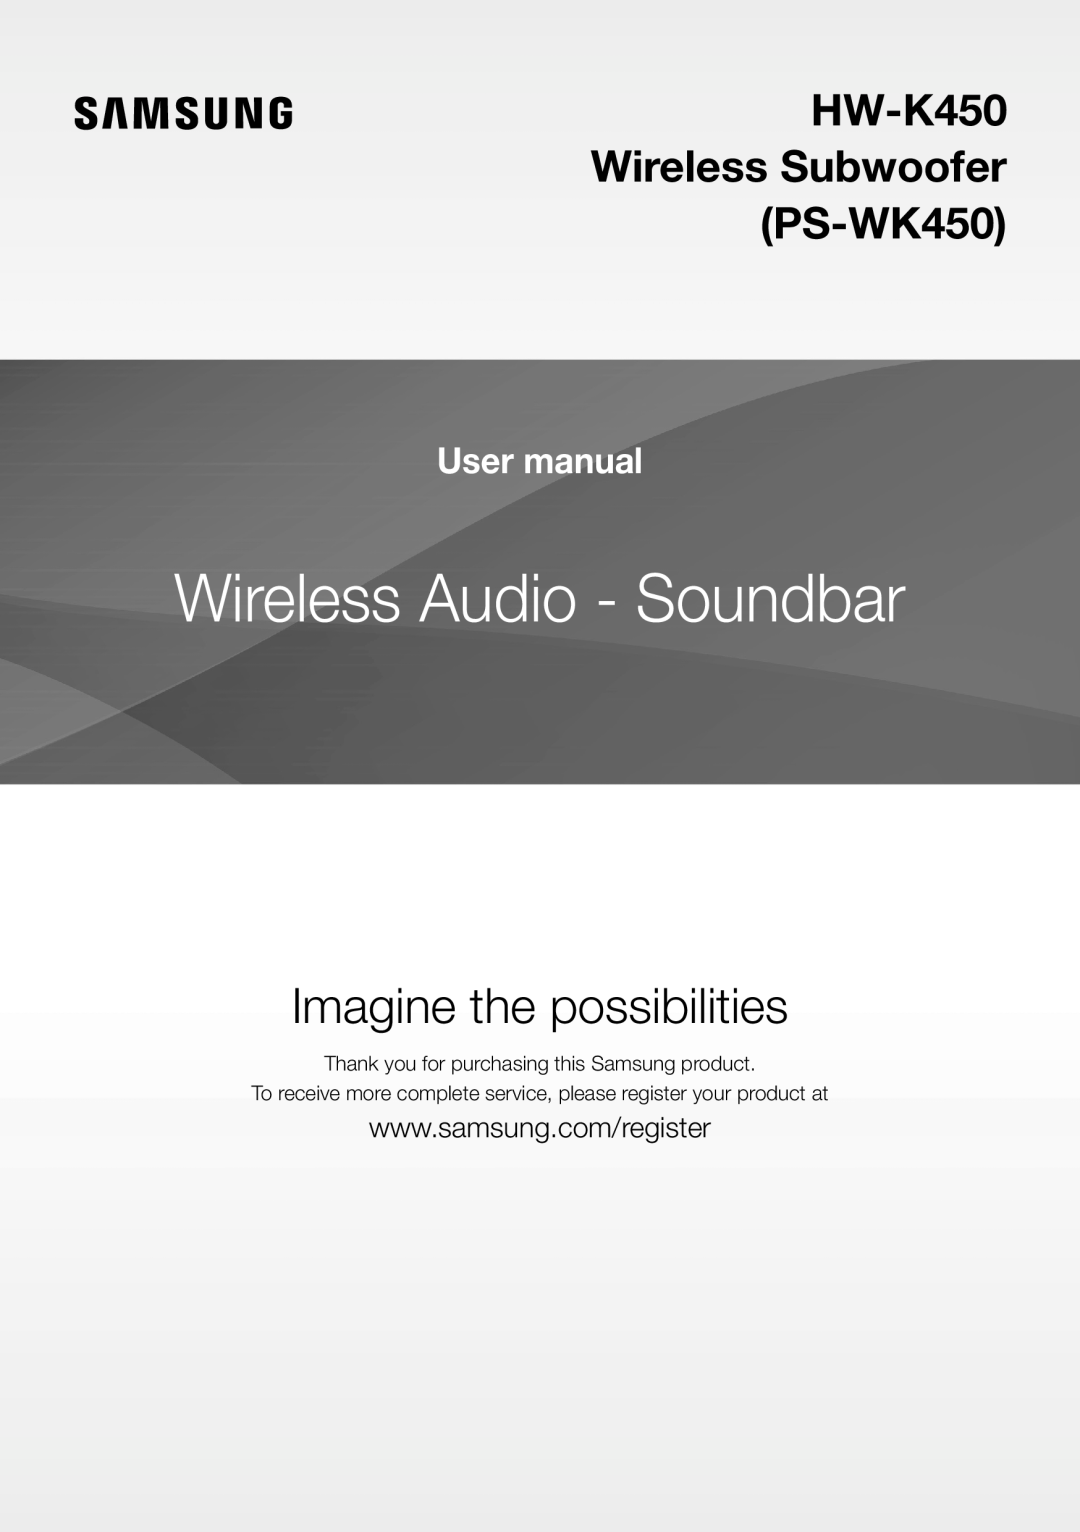 Samsung HW-J450/EN manual Wireless Audio - Soundbar, Imagine the possibilities, HW-K450 Wireless Subwoofer PS-WK450 